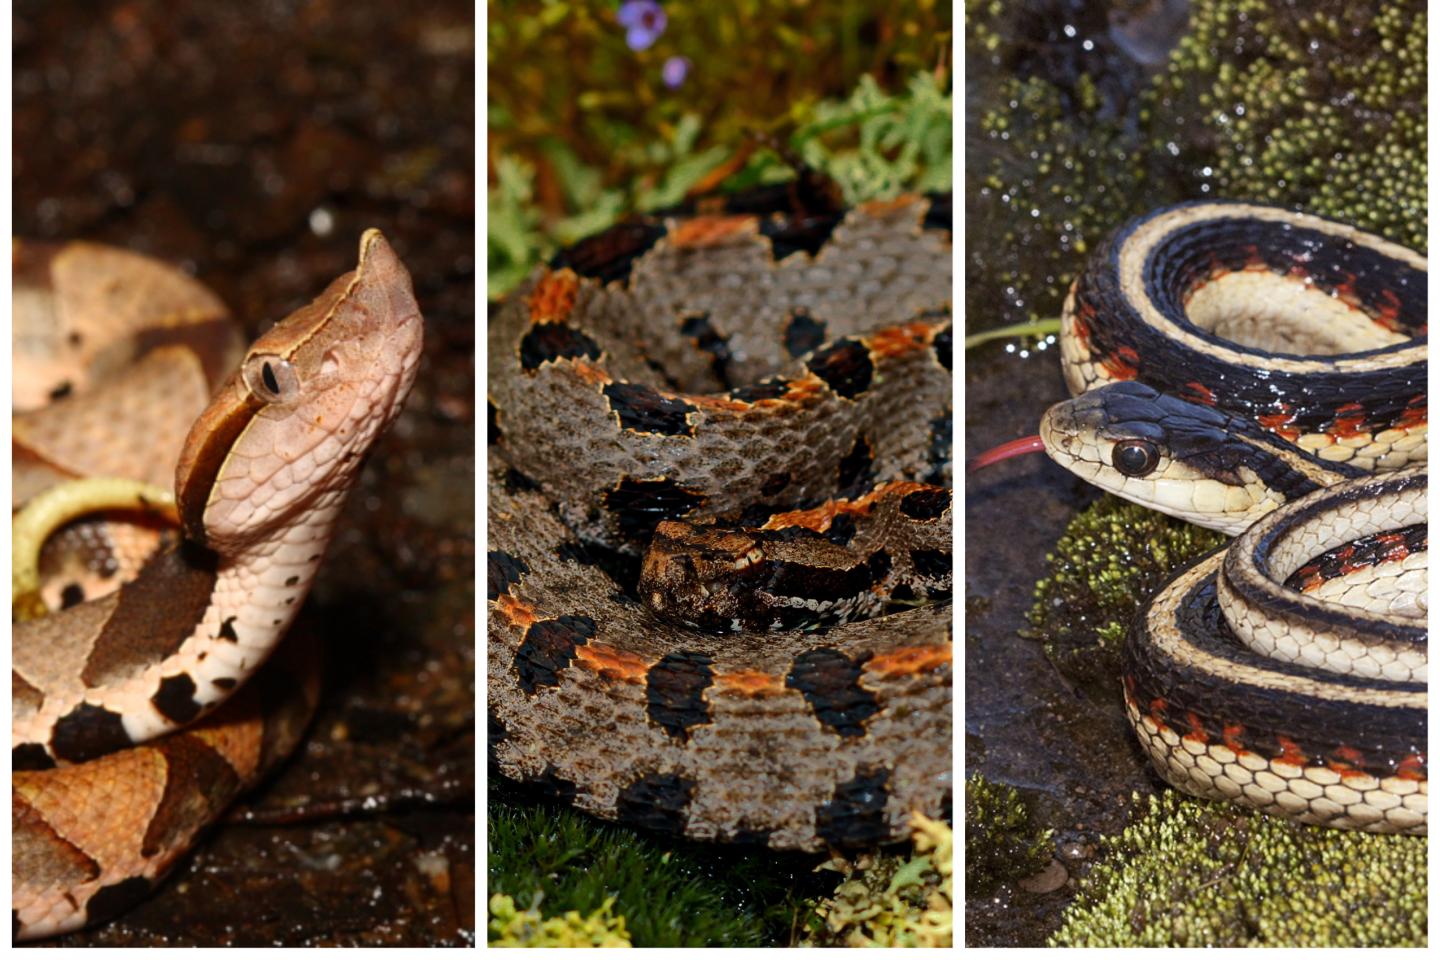 Three snake species